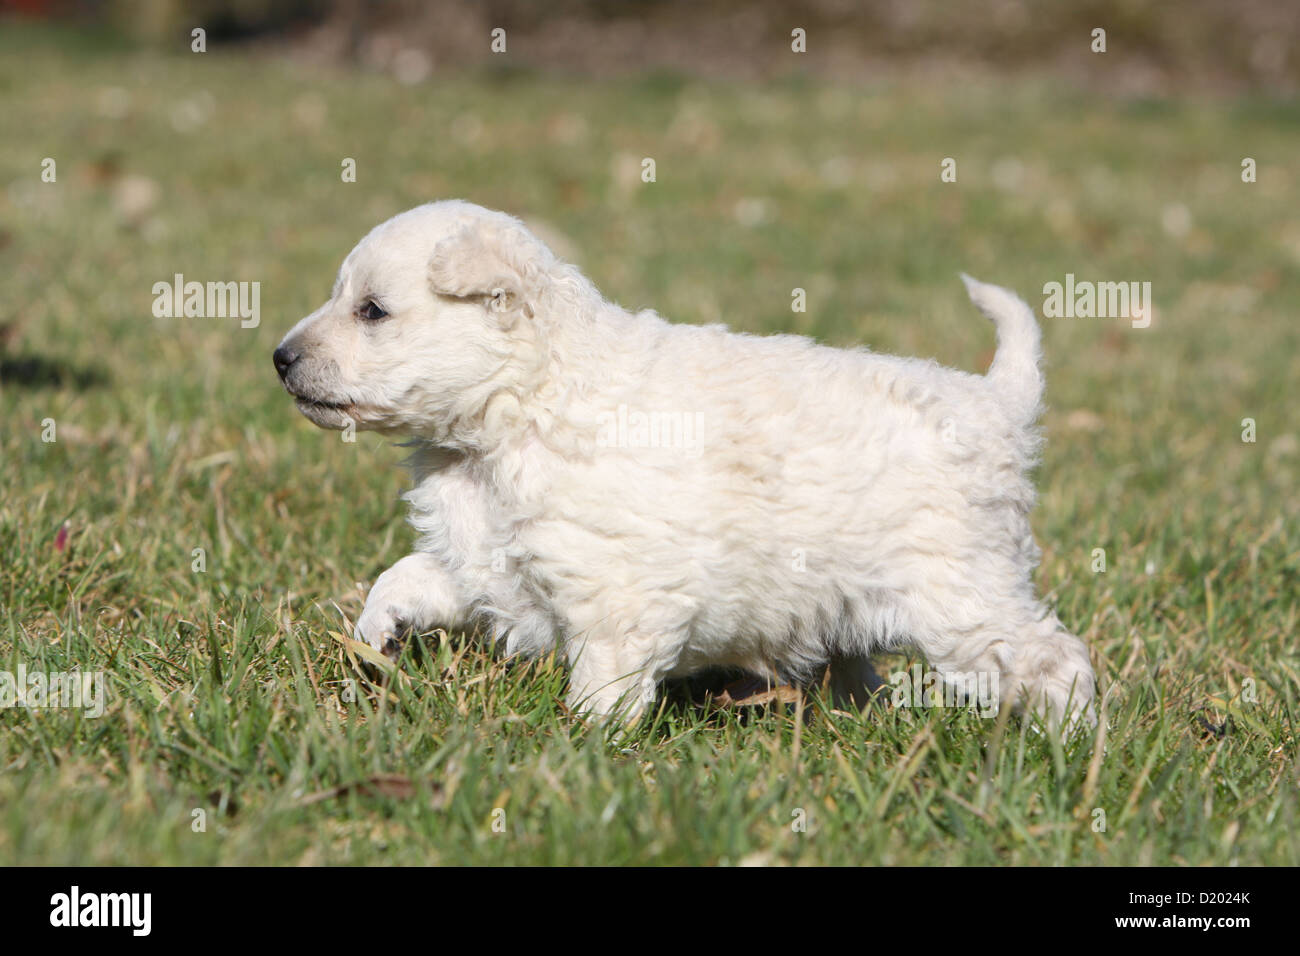 Dog Mudi (Hungarian sheepdog) puppy white walking in the grass Stock Photo